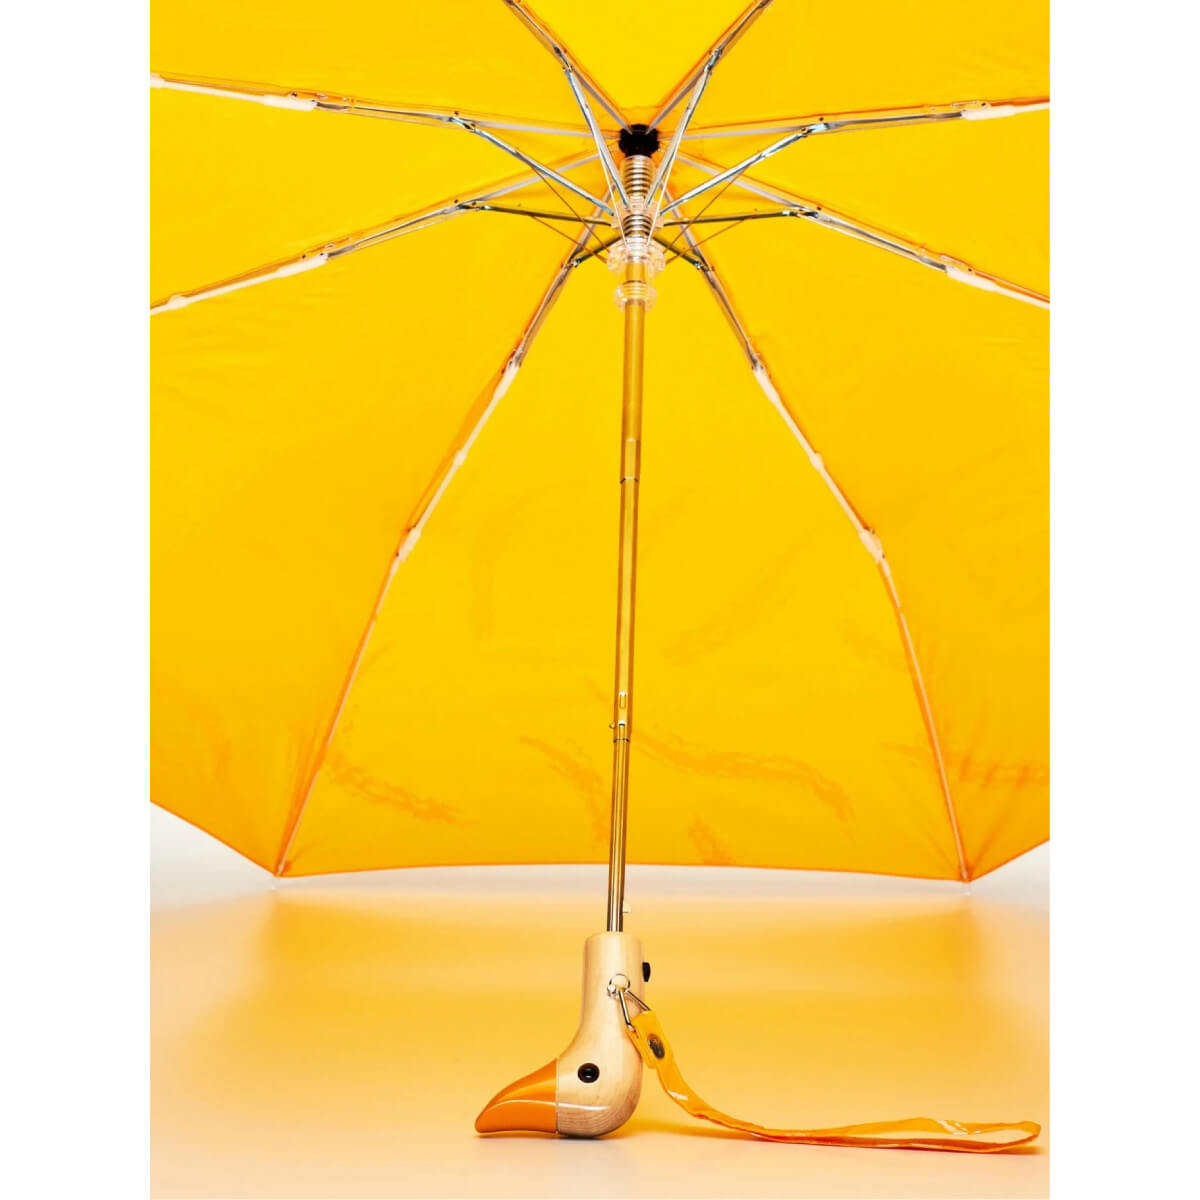 Saffron Brush Compact Duckhead Umbrella front | MILK MONEY milkmoney.co | white elephant gift ideas, gift, mother's day gift ideas, white elephant gift, gift shops near me, cute umbrella